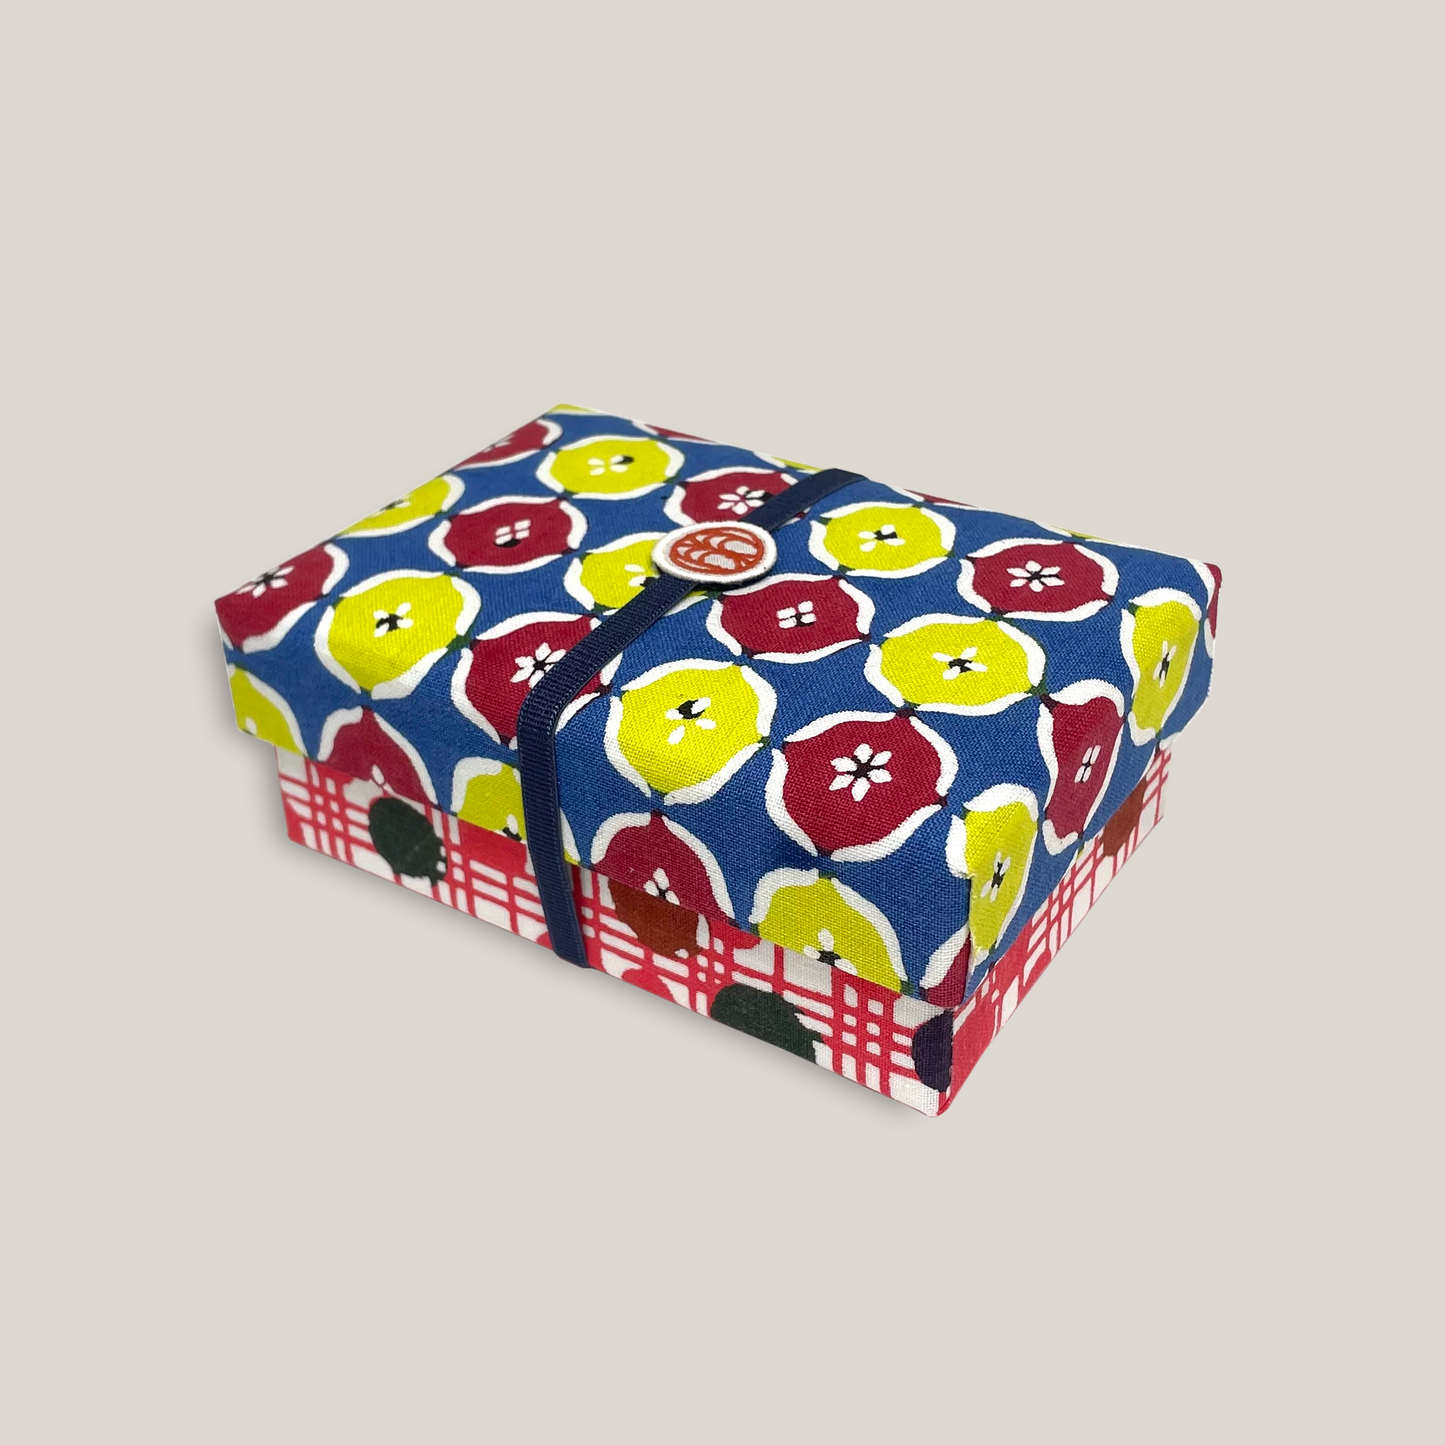 Fabric box S (business card size) / round pattern break x polka dot lattice